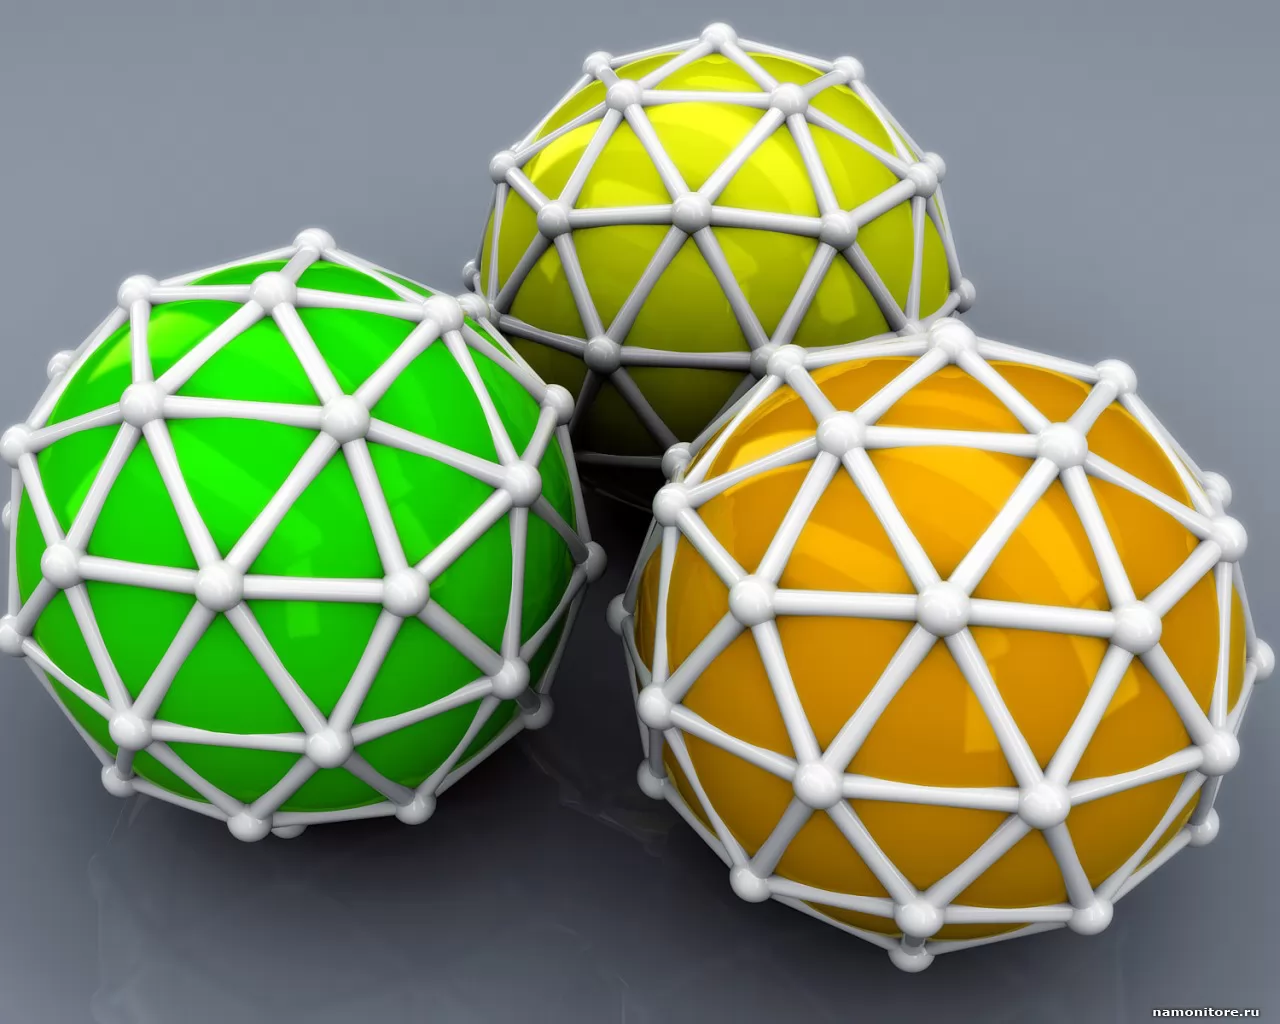 Polygon Punch, 3D,  